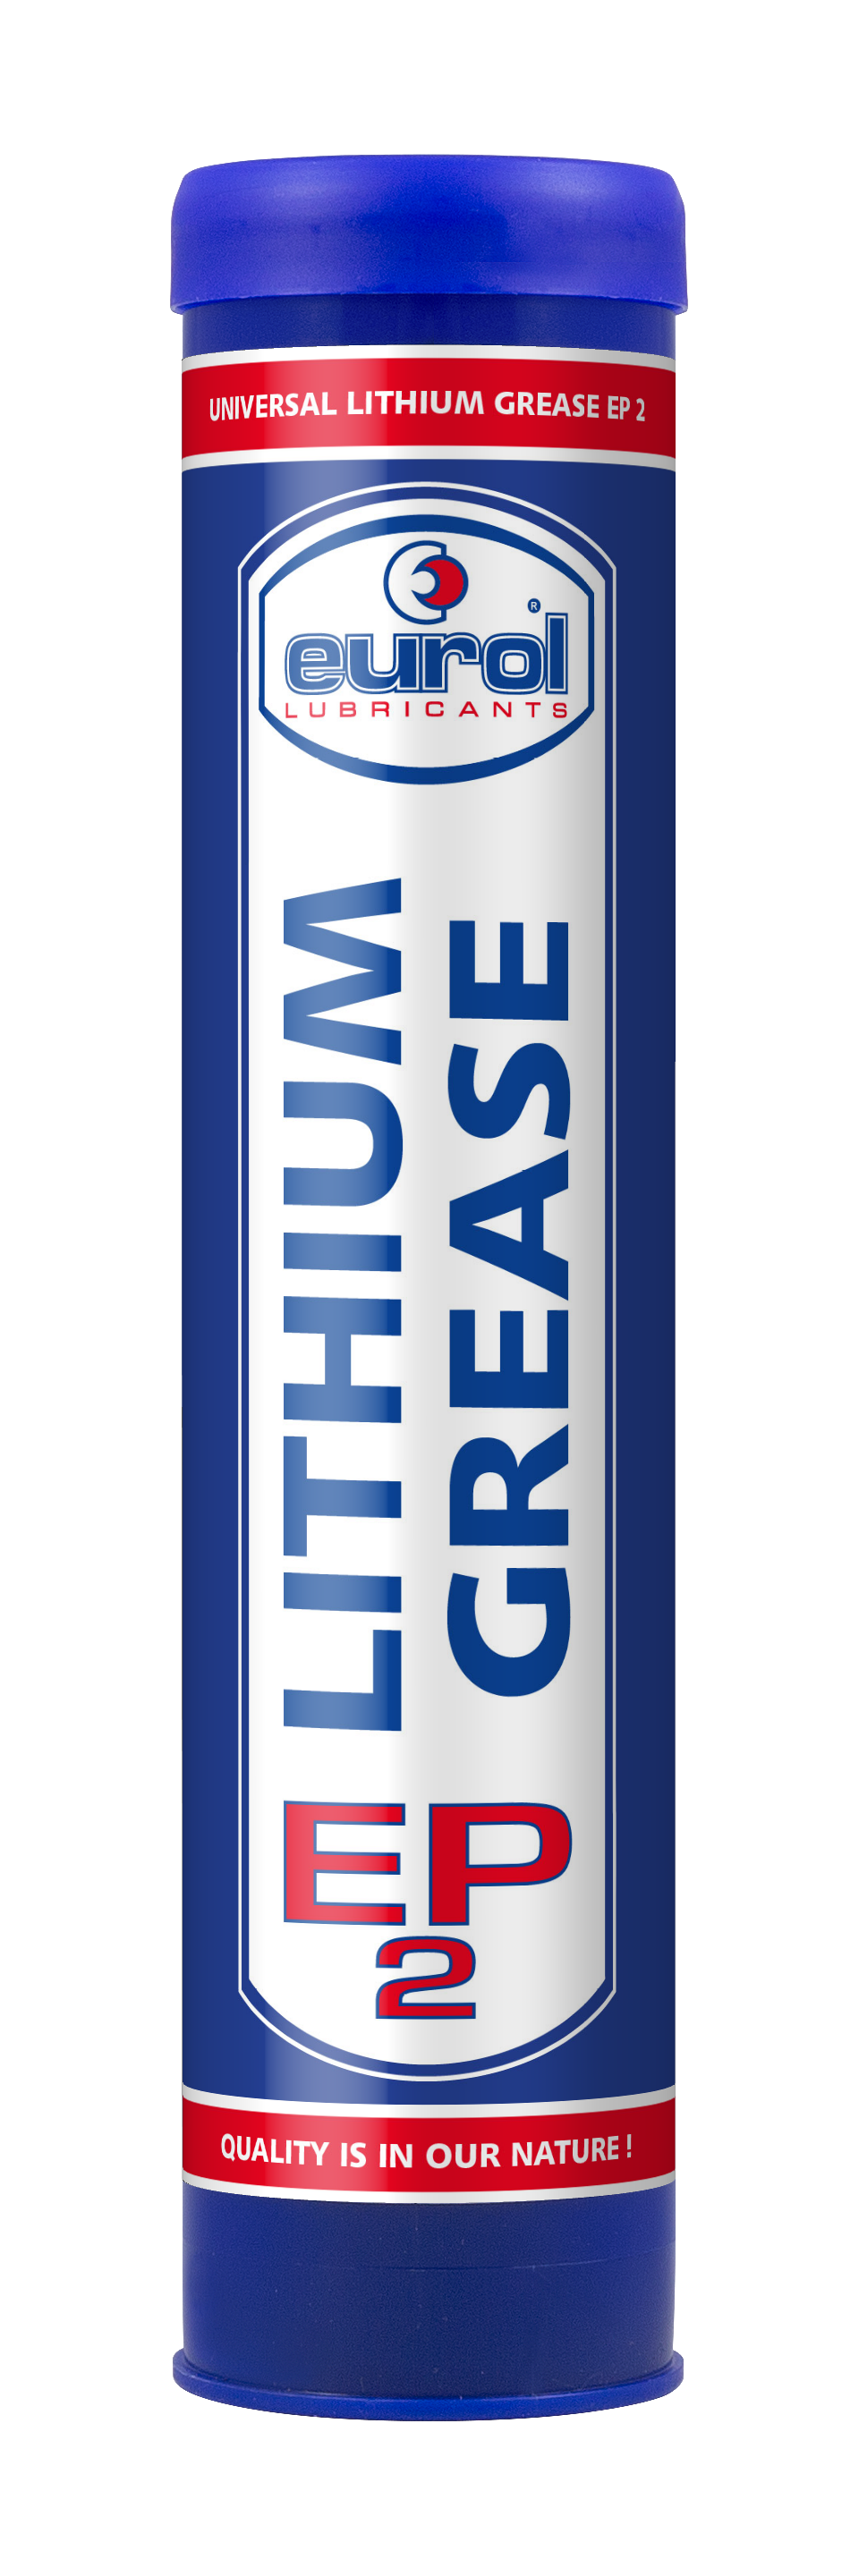 Eurol Universal Lithium Grease EP 2